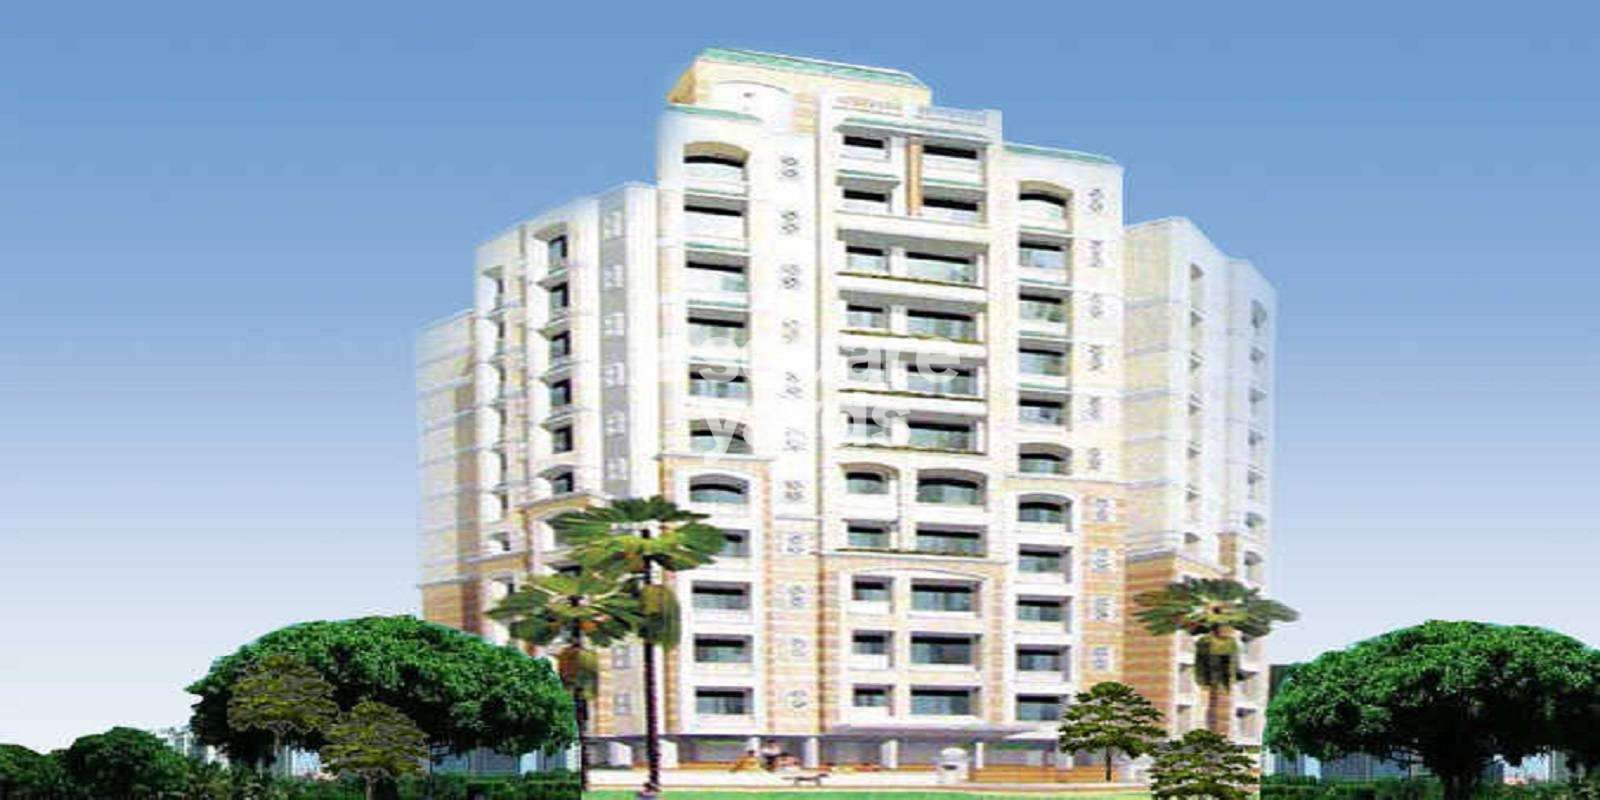 Saki Vihar Apartment Cover Image